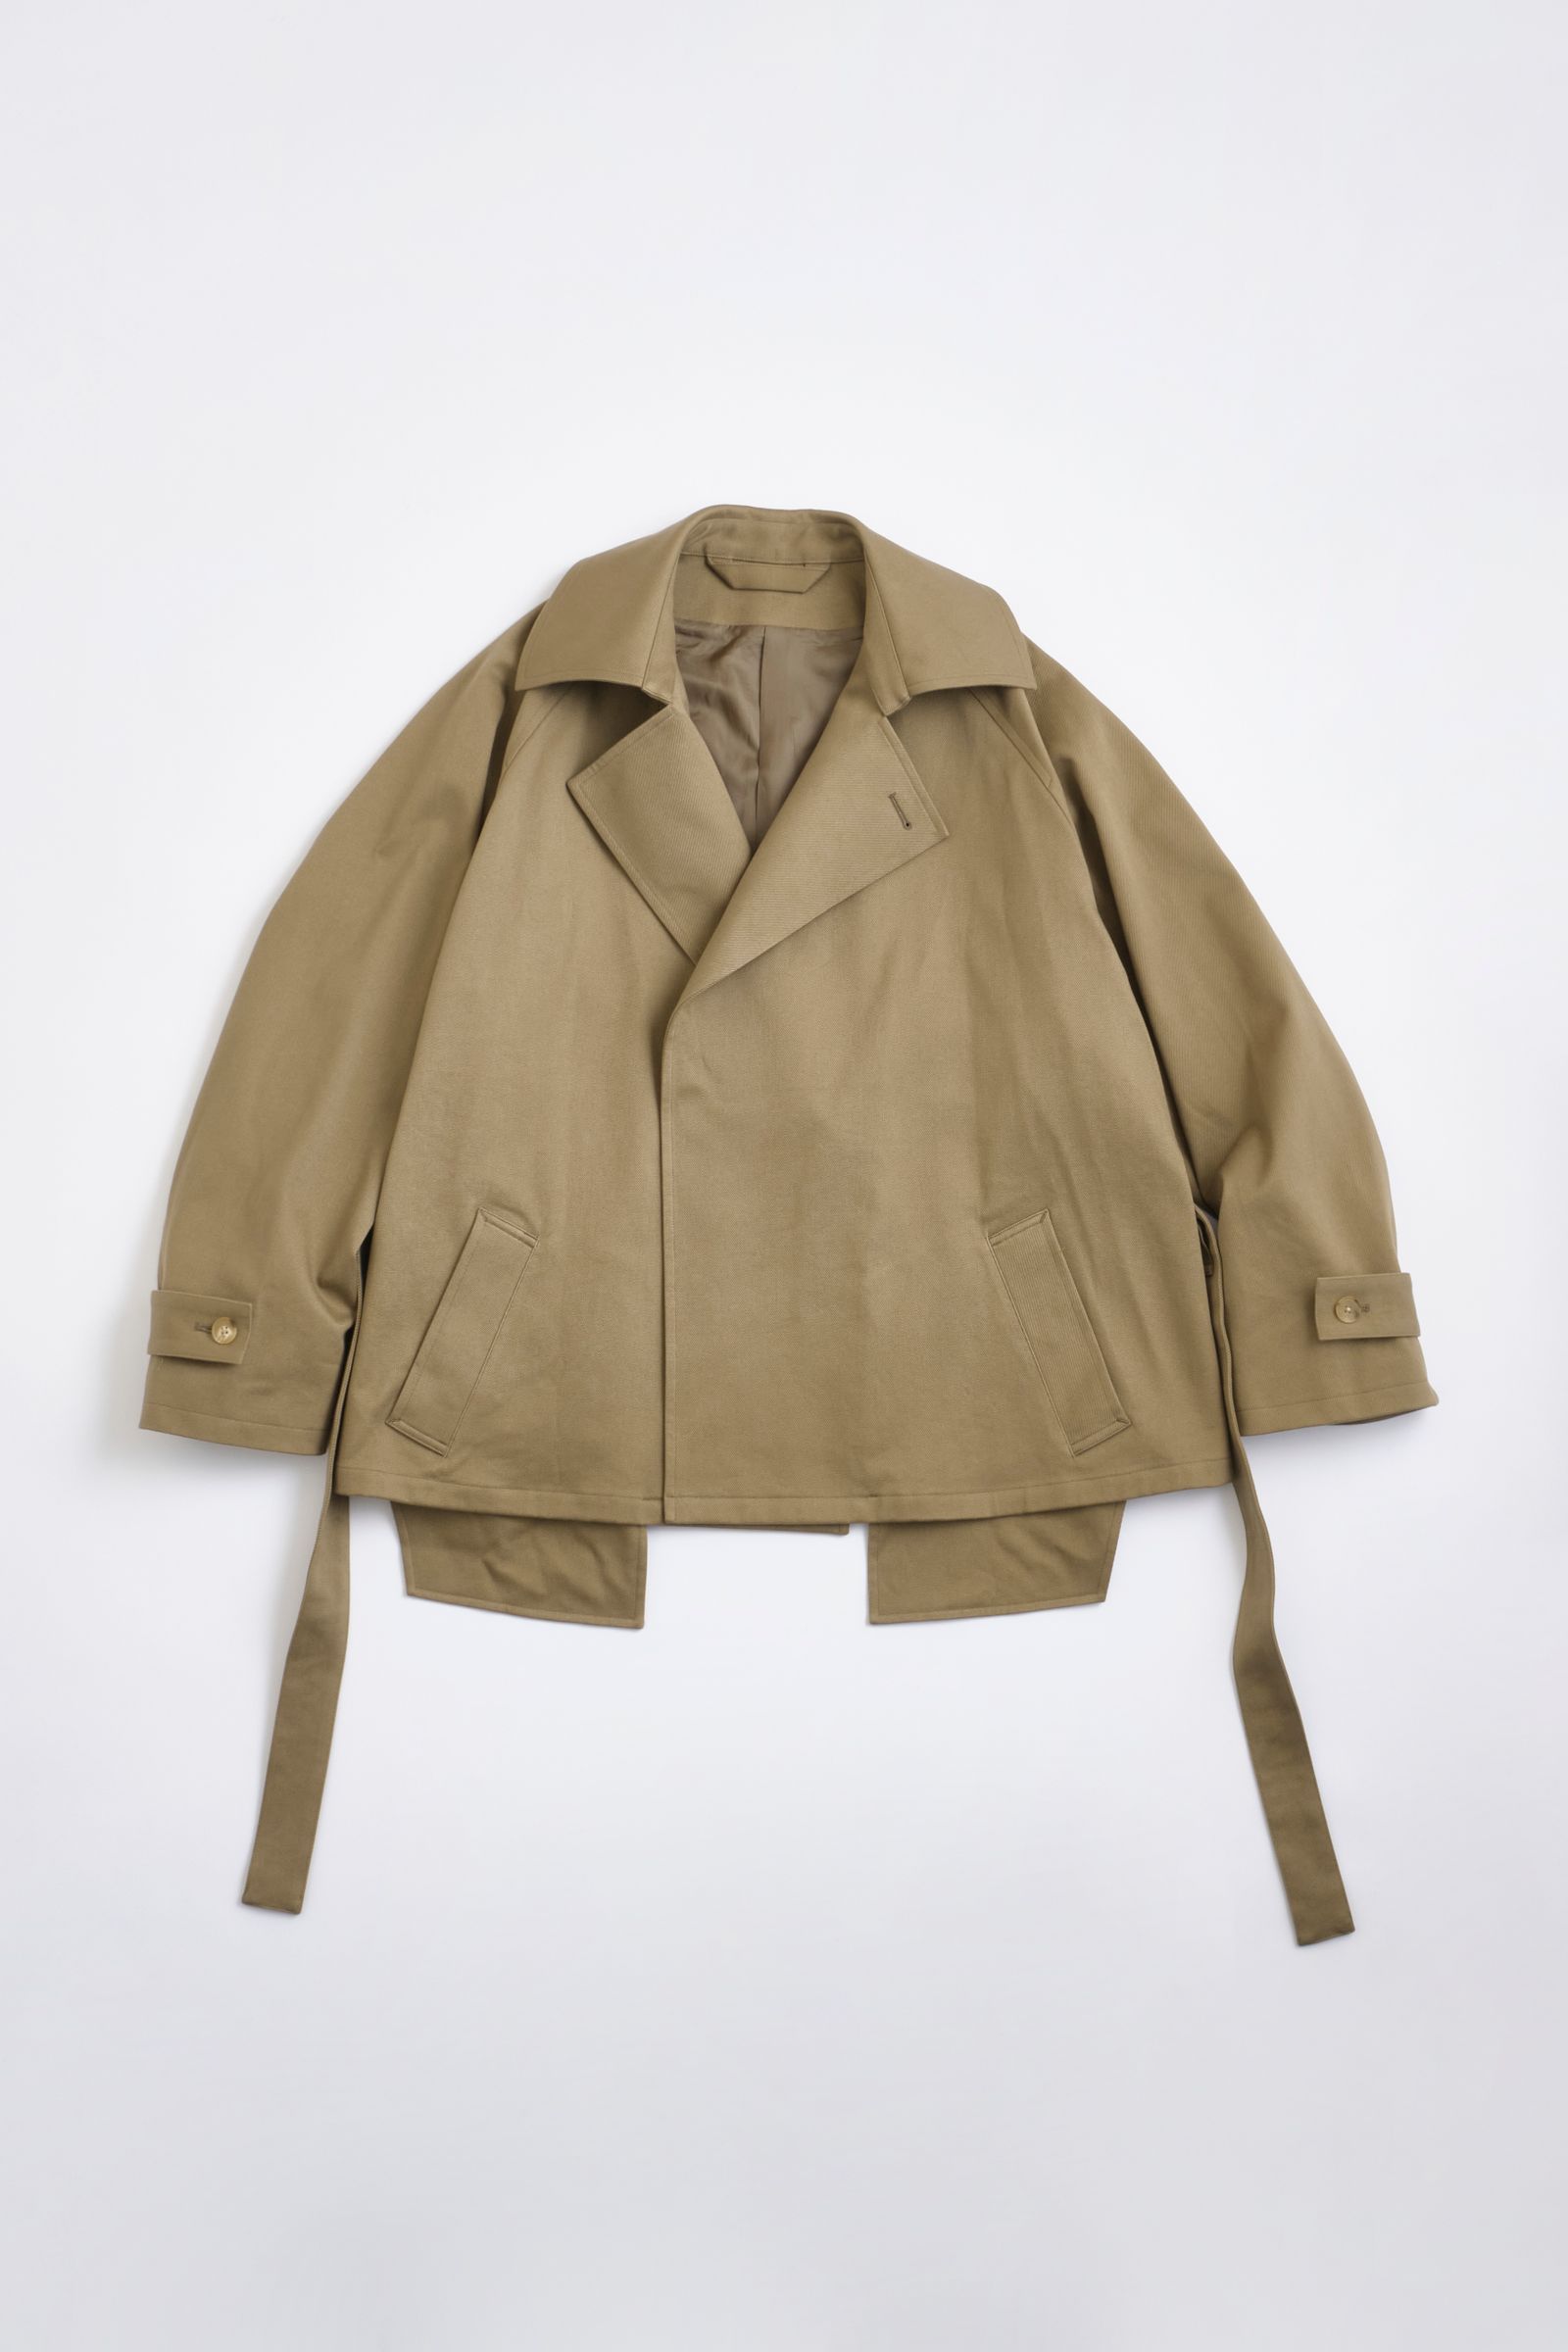 Blanc YM - Short trench coat / Beige | Retikle Online Store